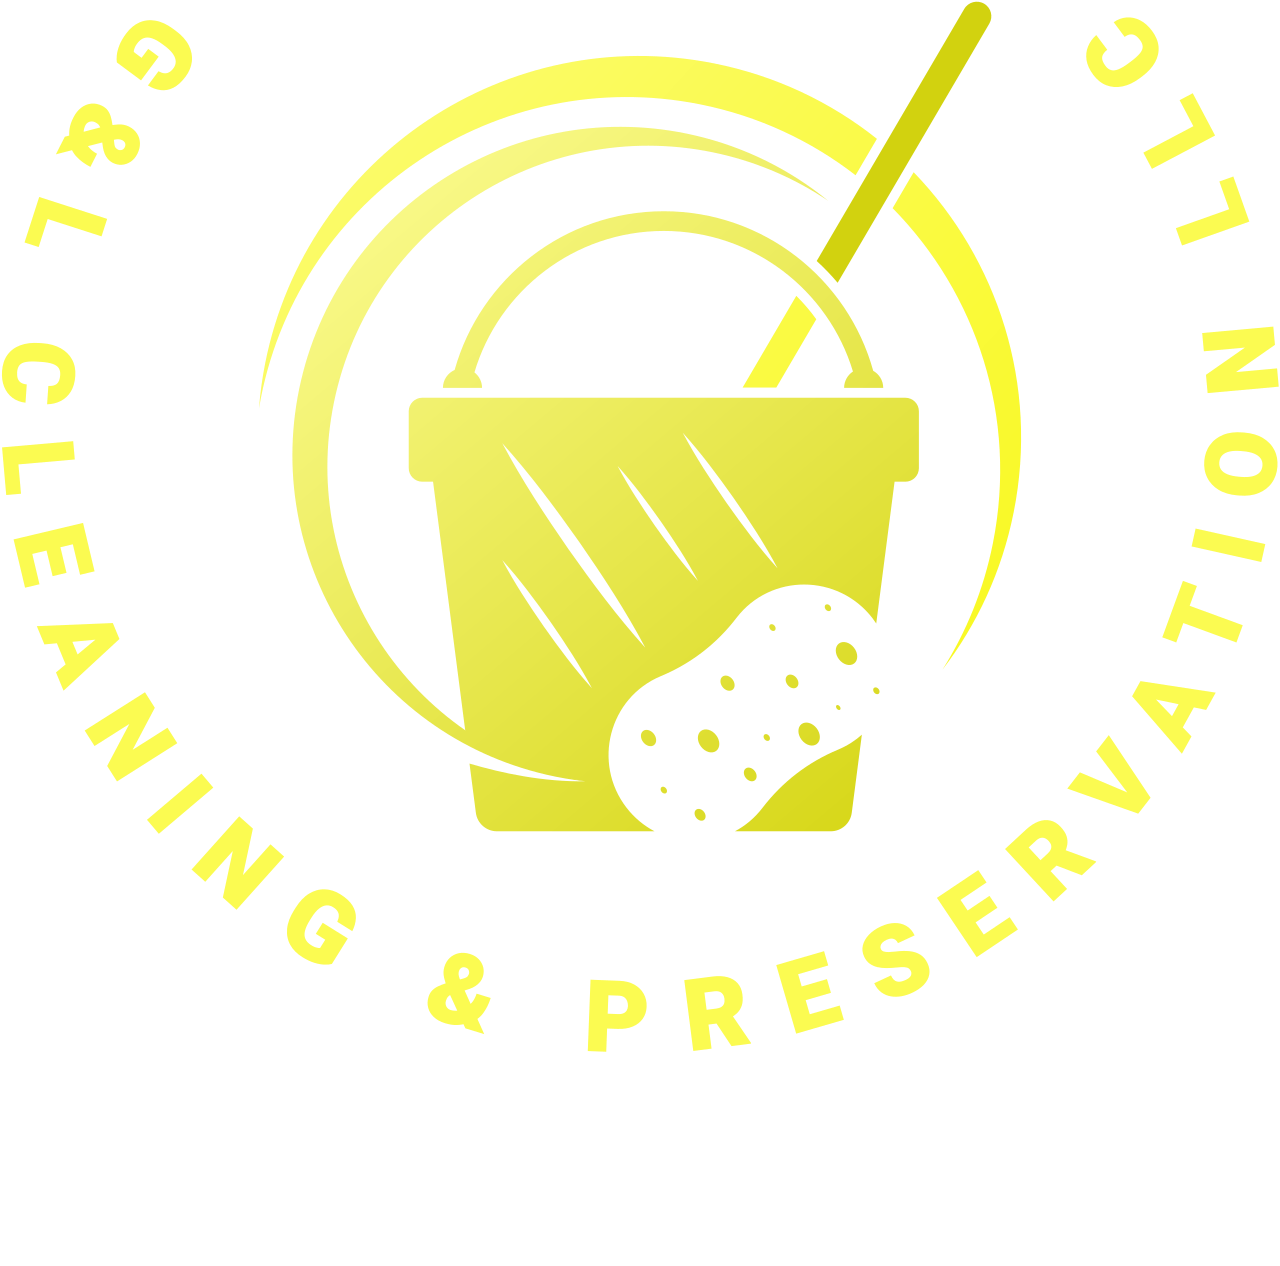 G&L CLEANING & PRESERVATION LLC's logo